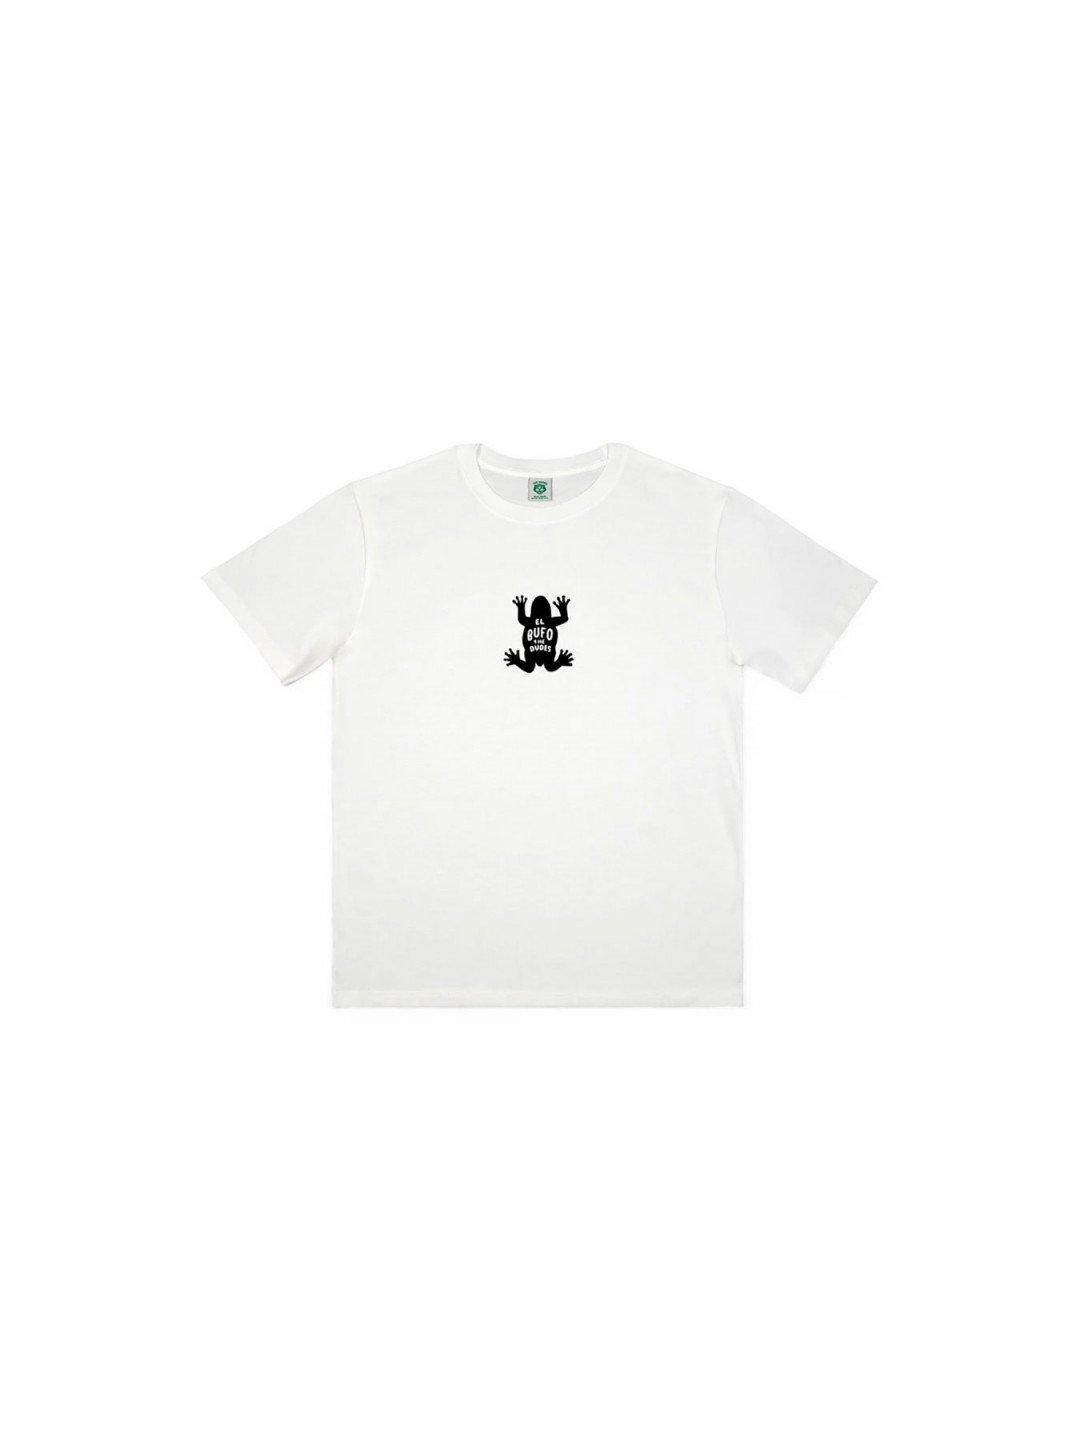 The Dudes El Bufo Classic Premium T-shirt Off-White